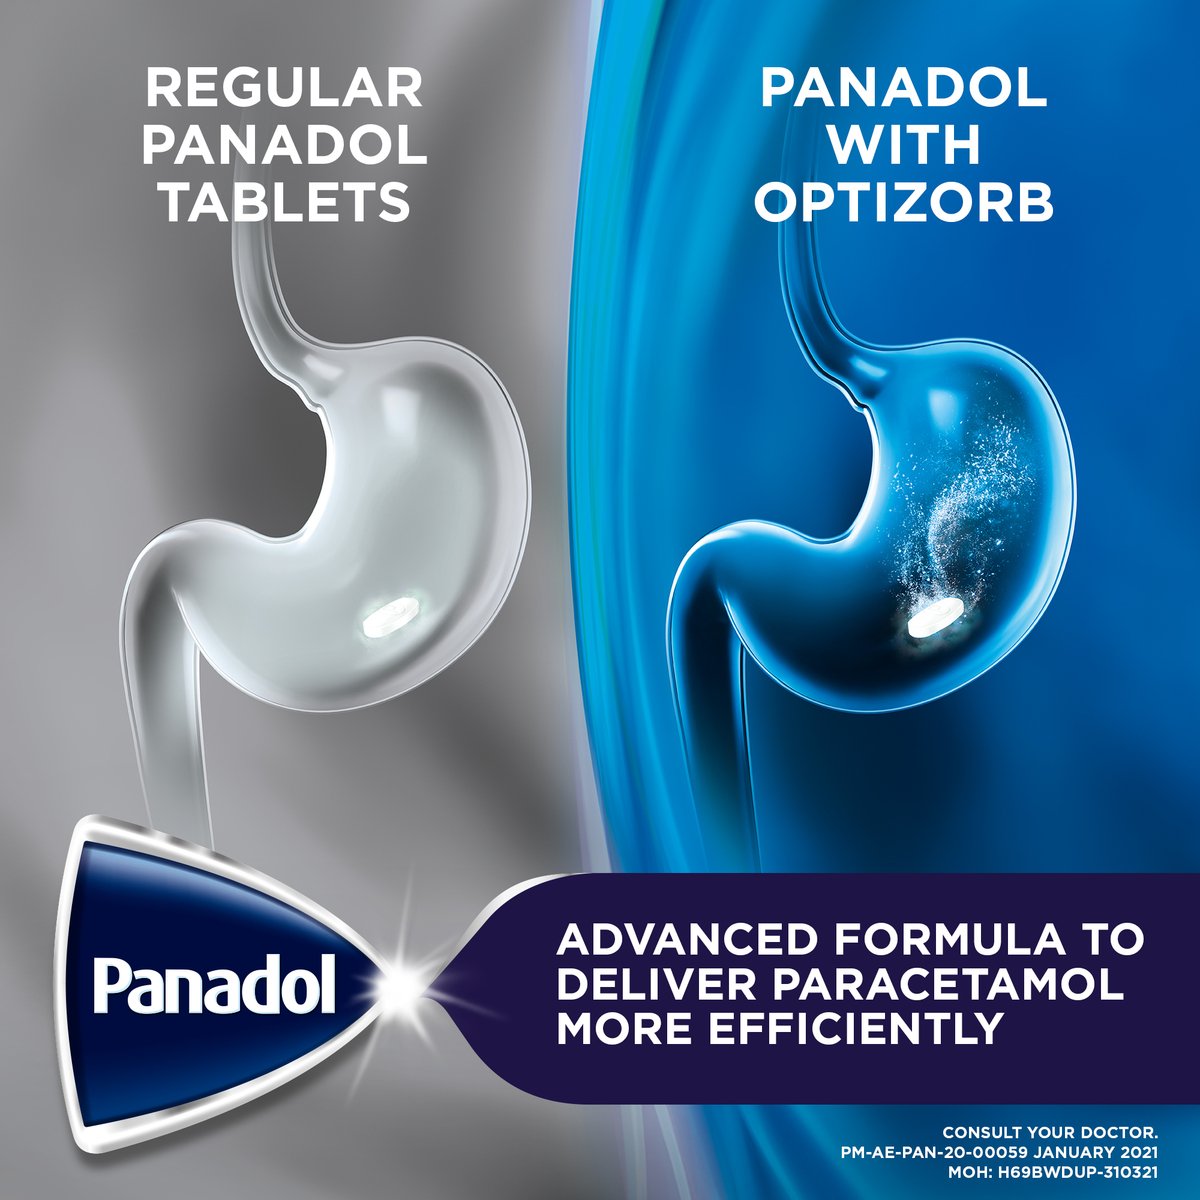 Panadol Advance 48 Tablets